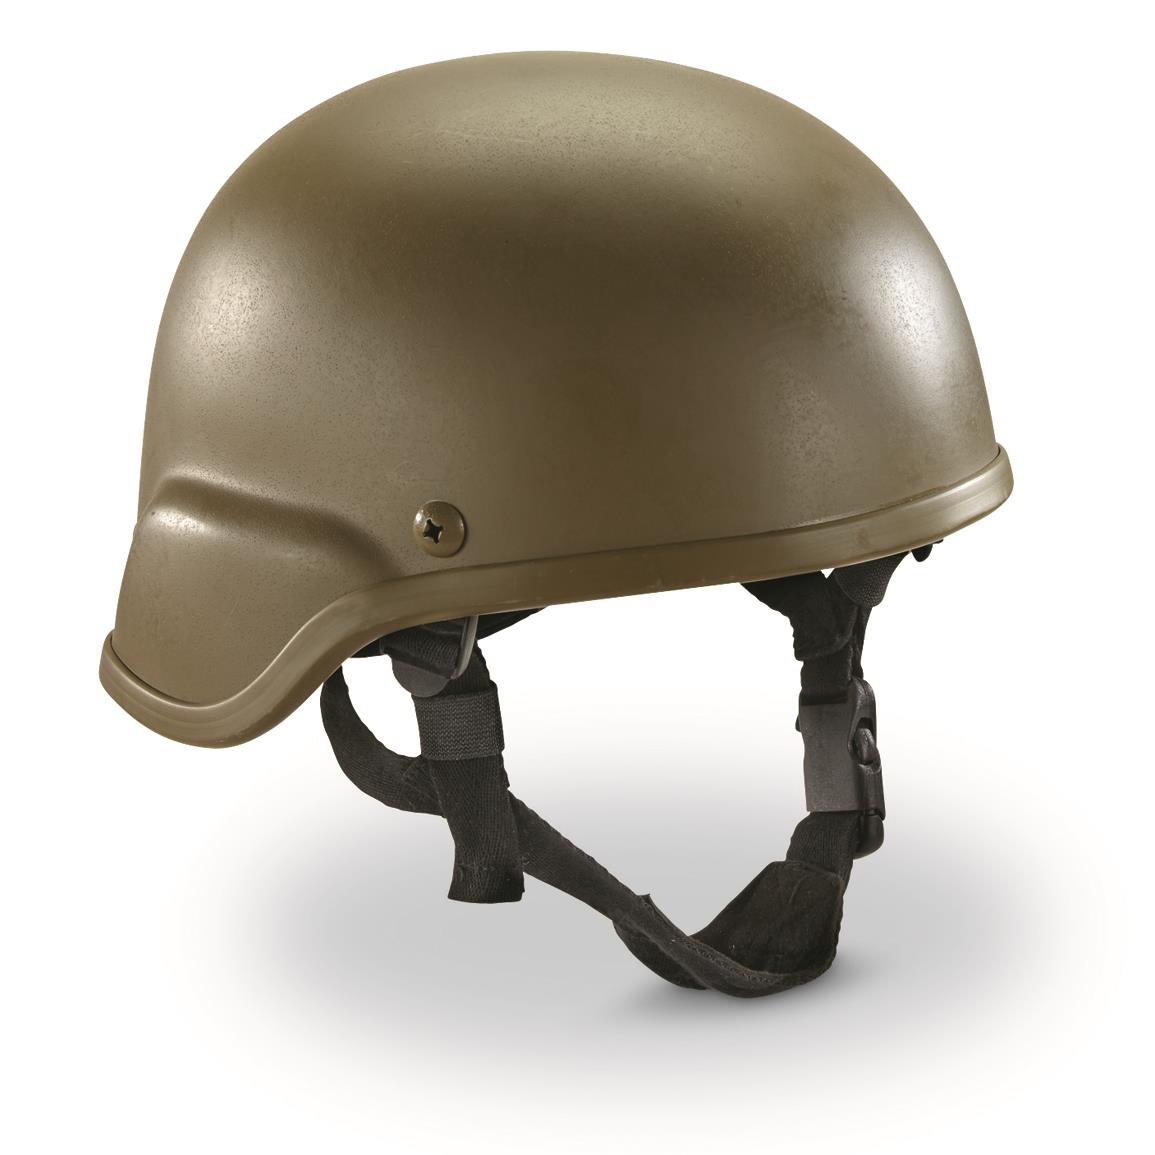 U S Military  MICH Helmet  Reproduction 700382 Helmets  